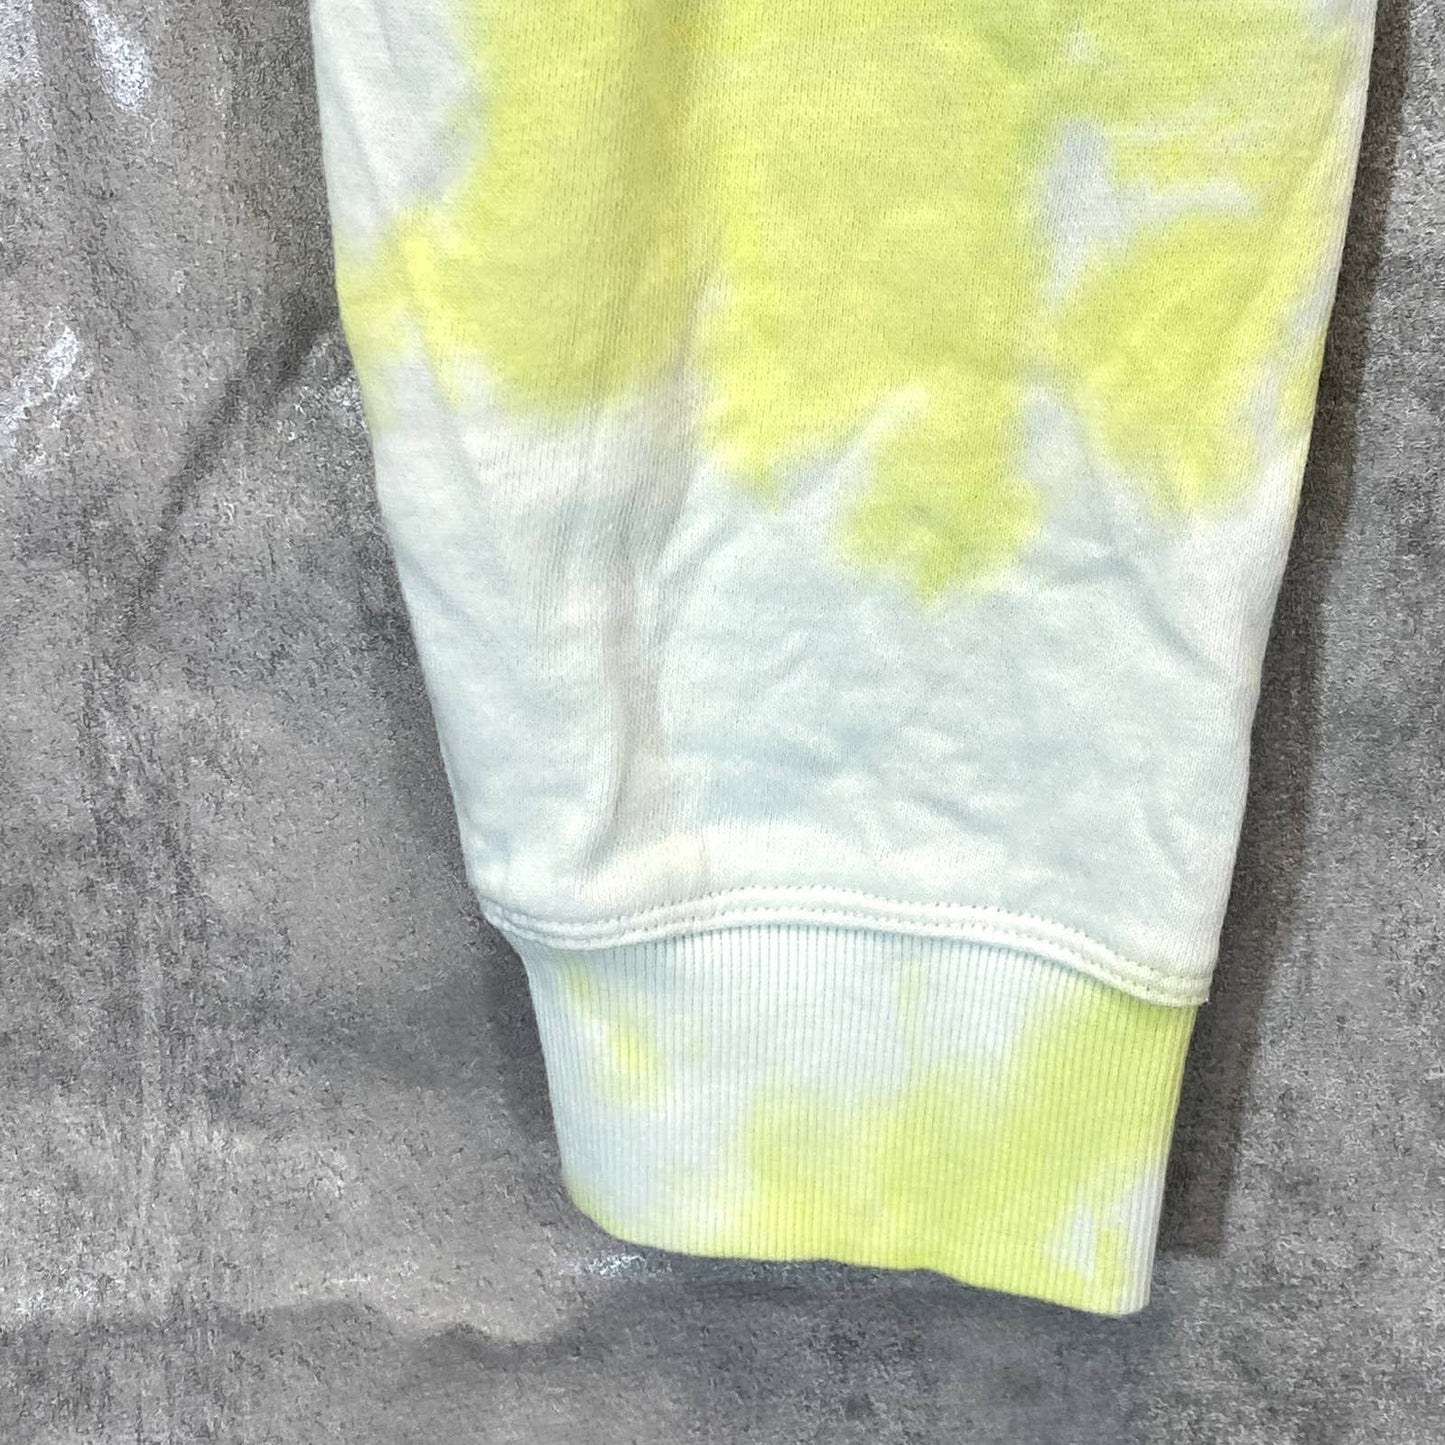 CALVIN KLEIN Women's Yellow Sunburst Tie-Dye Pull-On Drawstring Jogger Pants SZ S